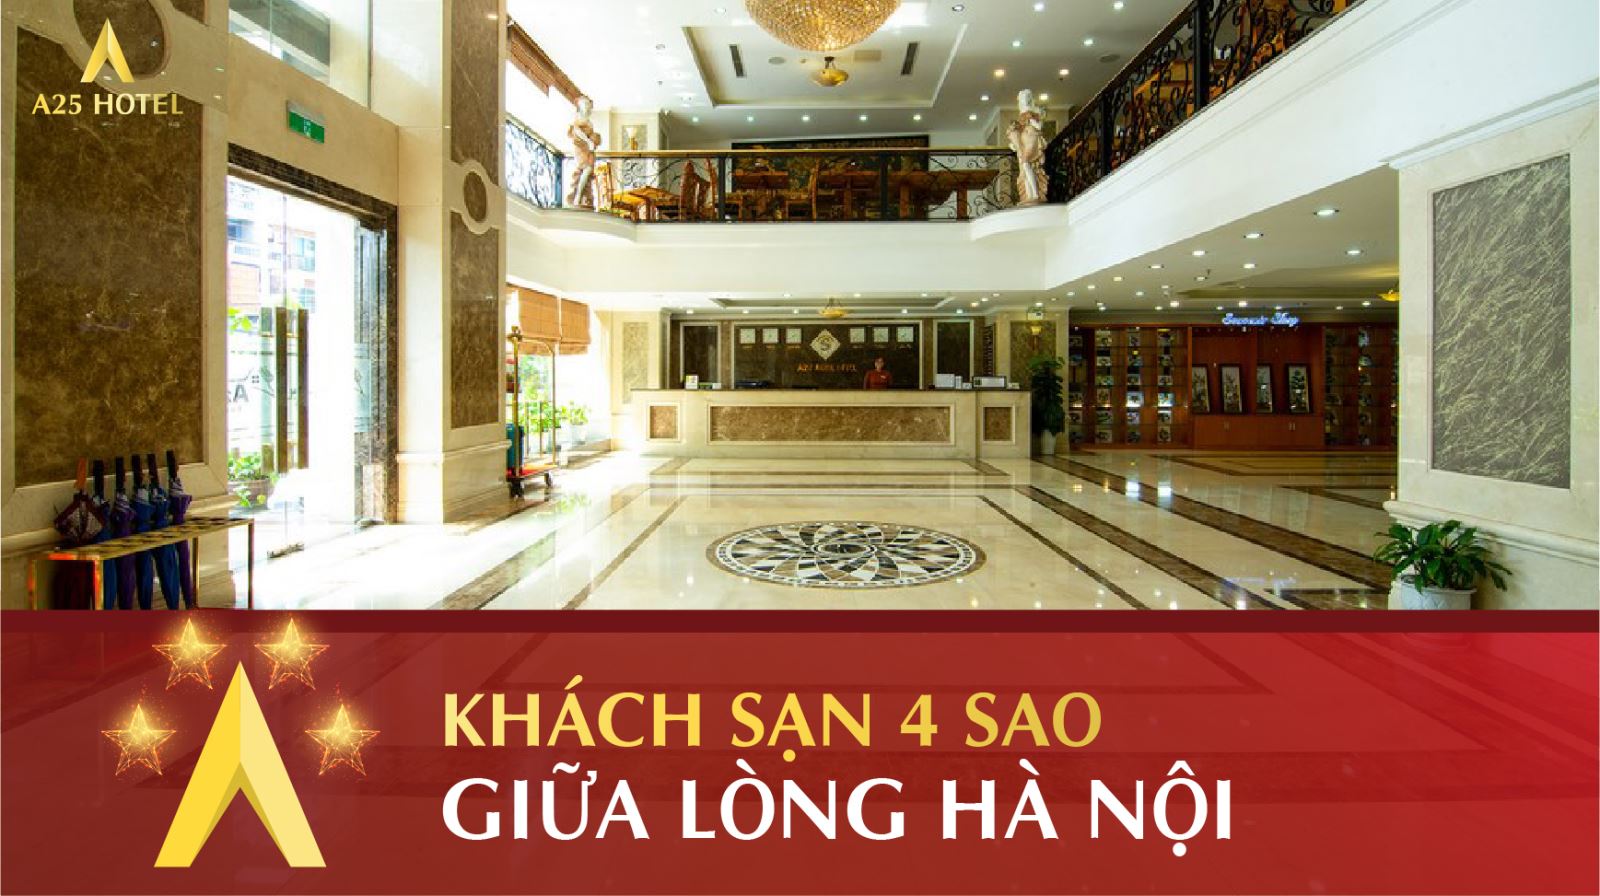 a25-hotel-spa-diem-nghi-duong-ly-tuong-giua-long-ha-noi